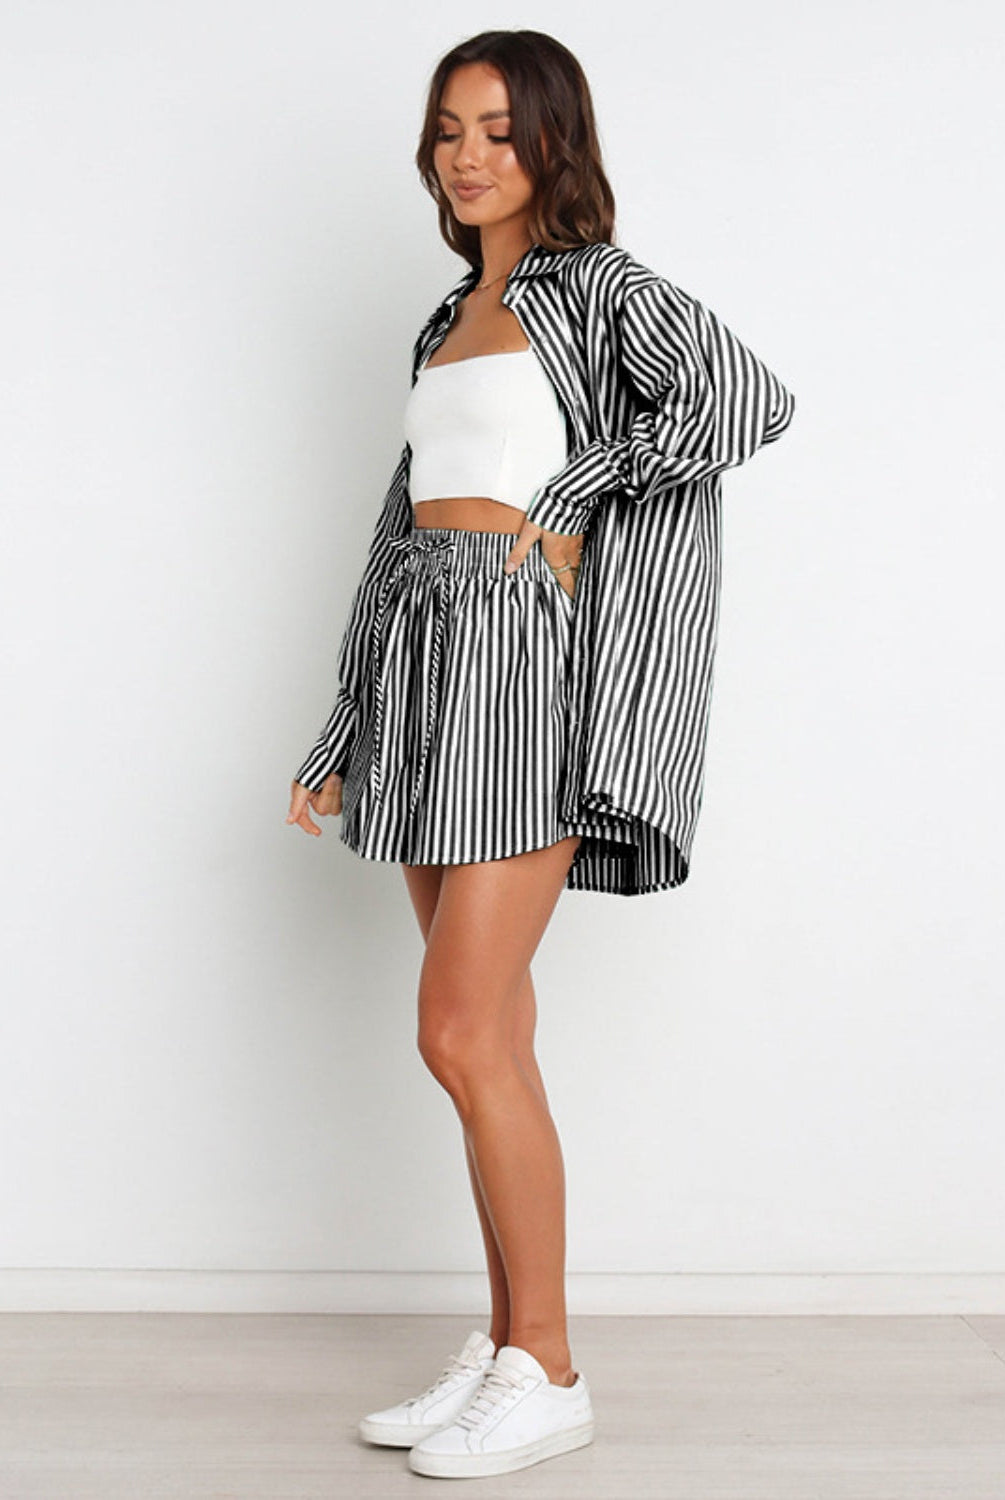 Bon Voyage Striped Button Down Top & Shorts Set-2 Piece Outfit Sets-Krush Kandy, Women's Online Fashion Boutique Located in Phoenix, Arizona (Scottsdale Area)